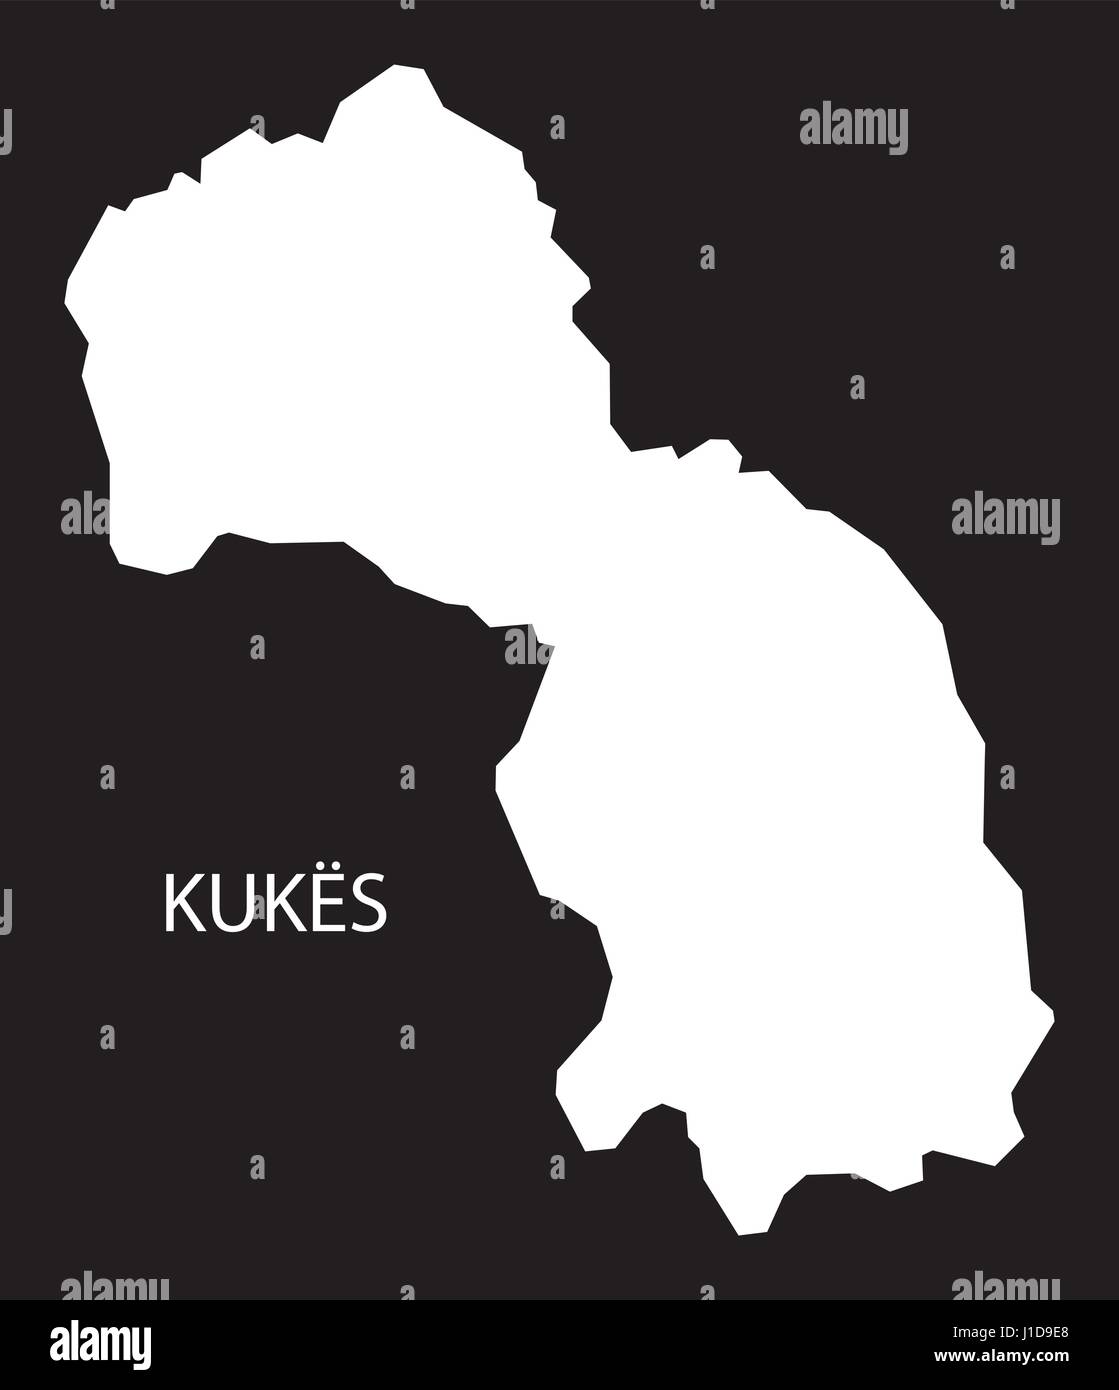 Kukes Albanien Karte schwarz invertiert Silhouette Abbildung Stock Vektor